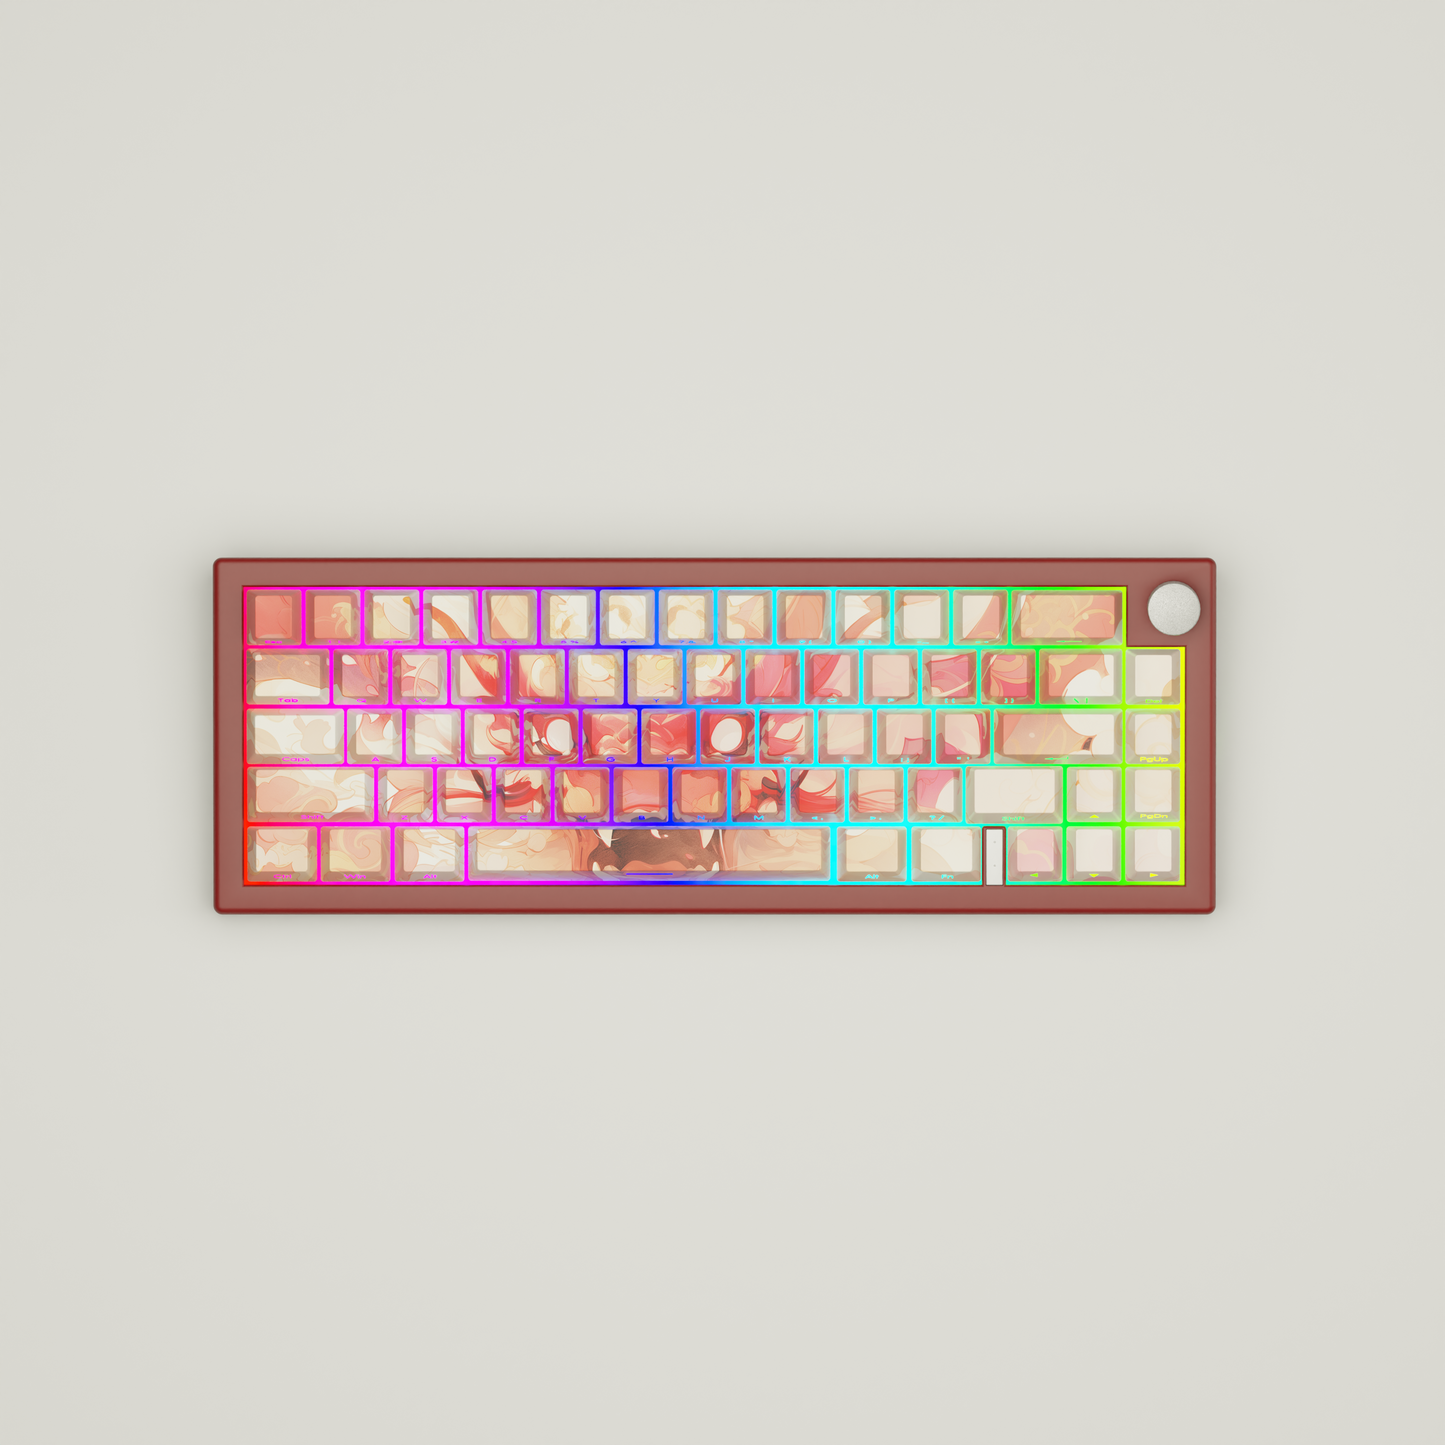 Fire Dragon GMK67 Keyboard | Designed By Serenity Starlight